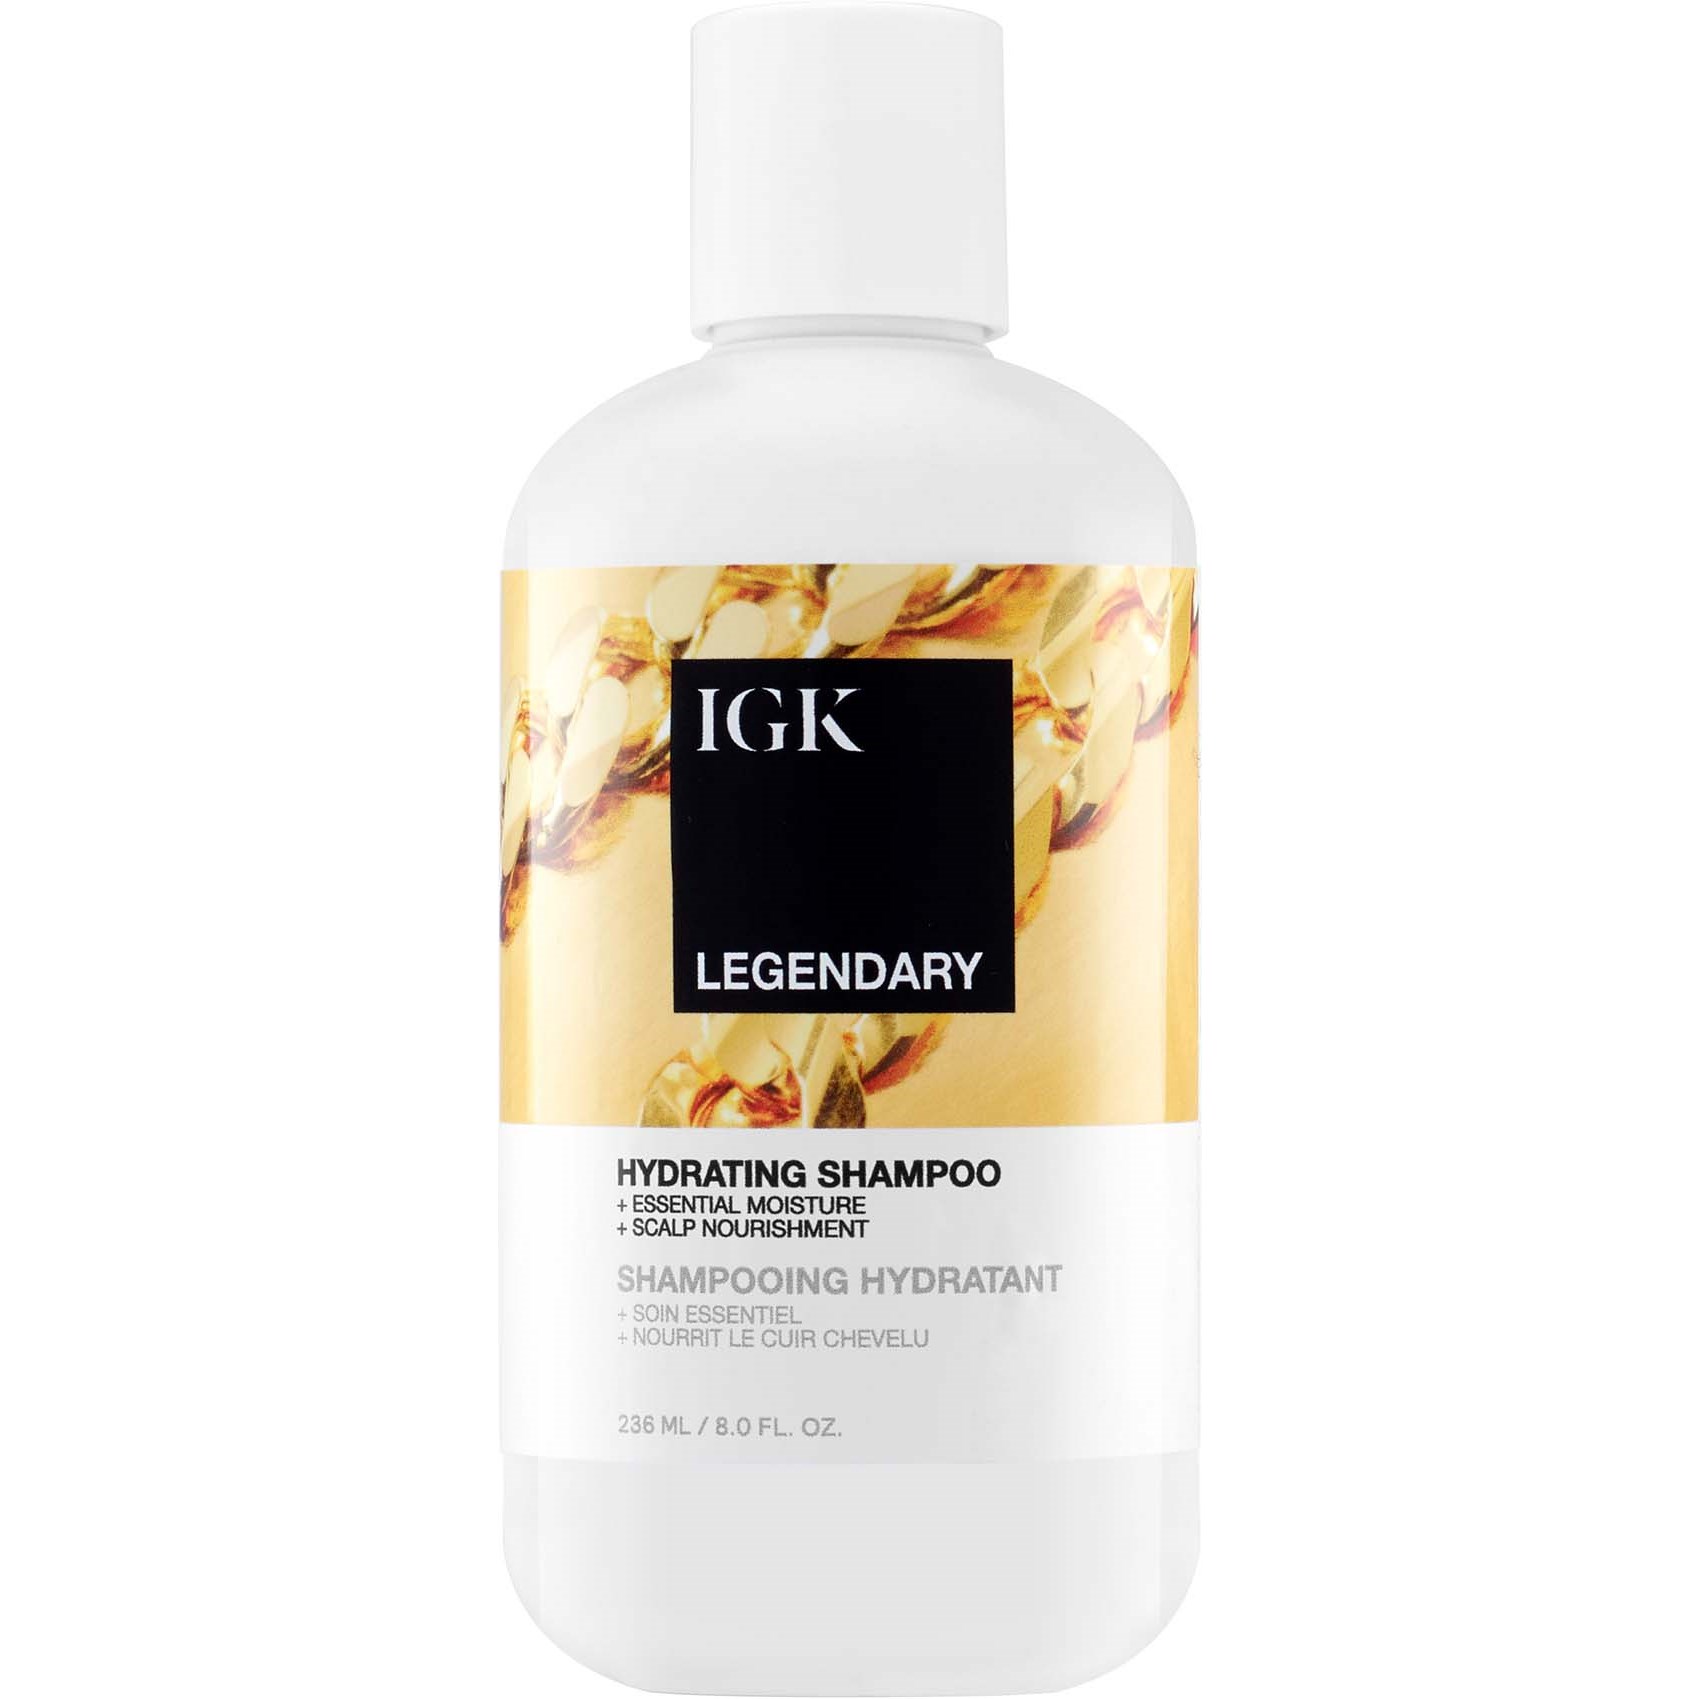 IGK Legendary Dream Hair Shampoo 236 ml